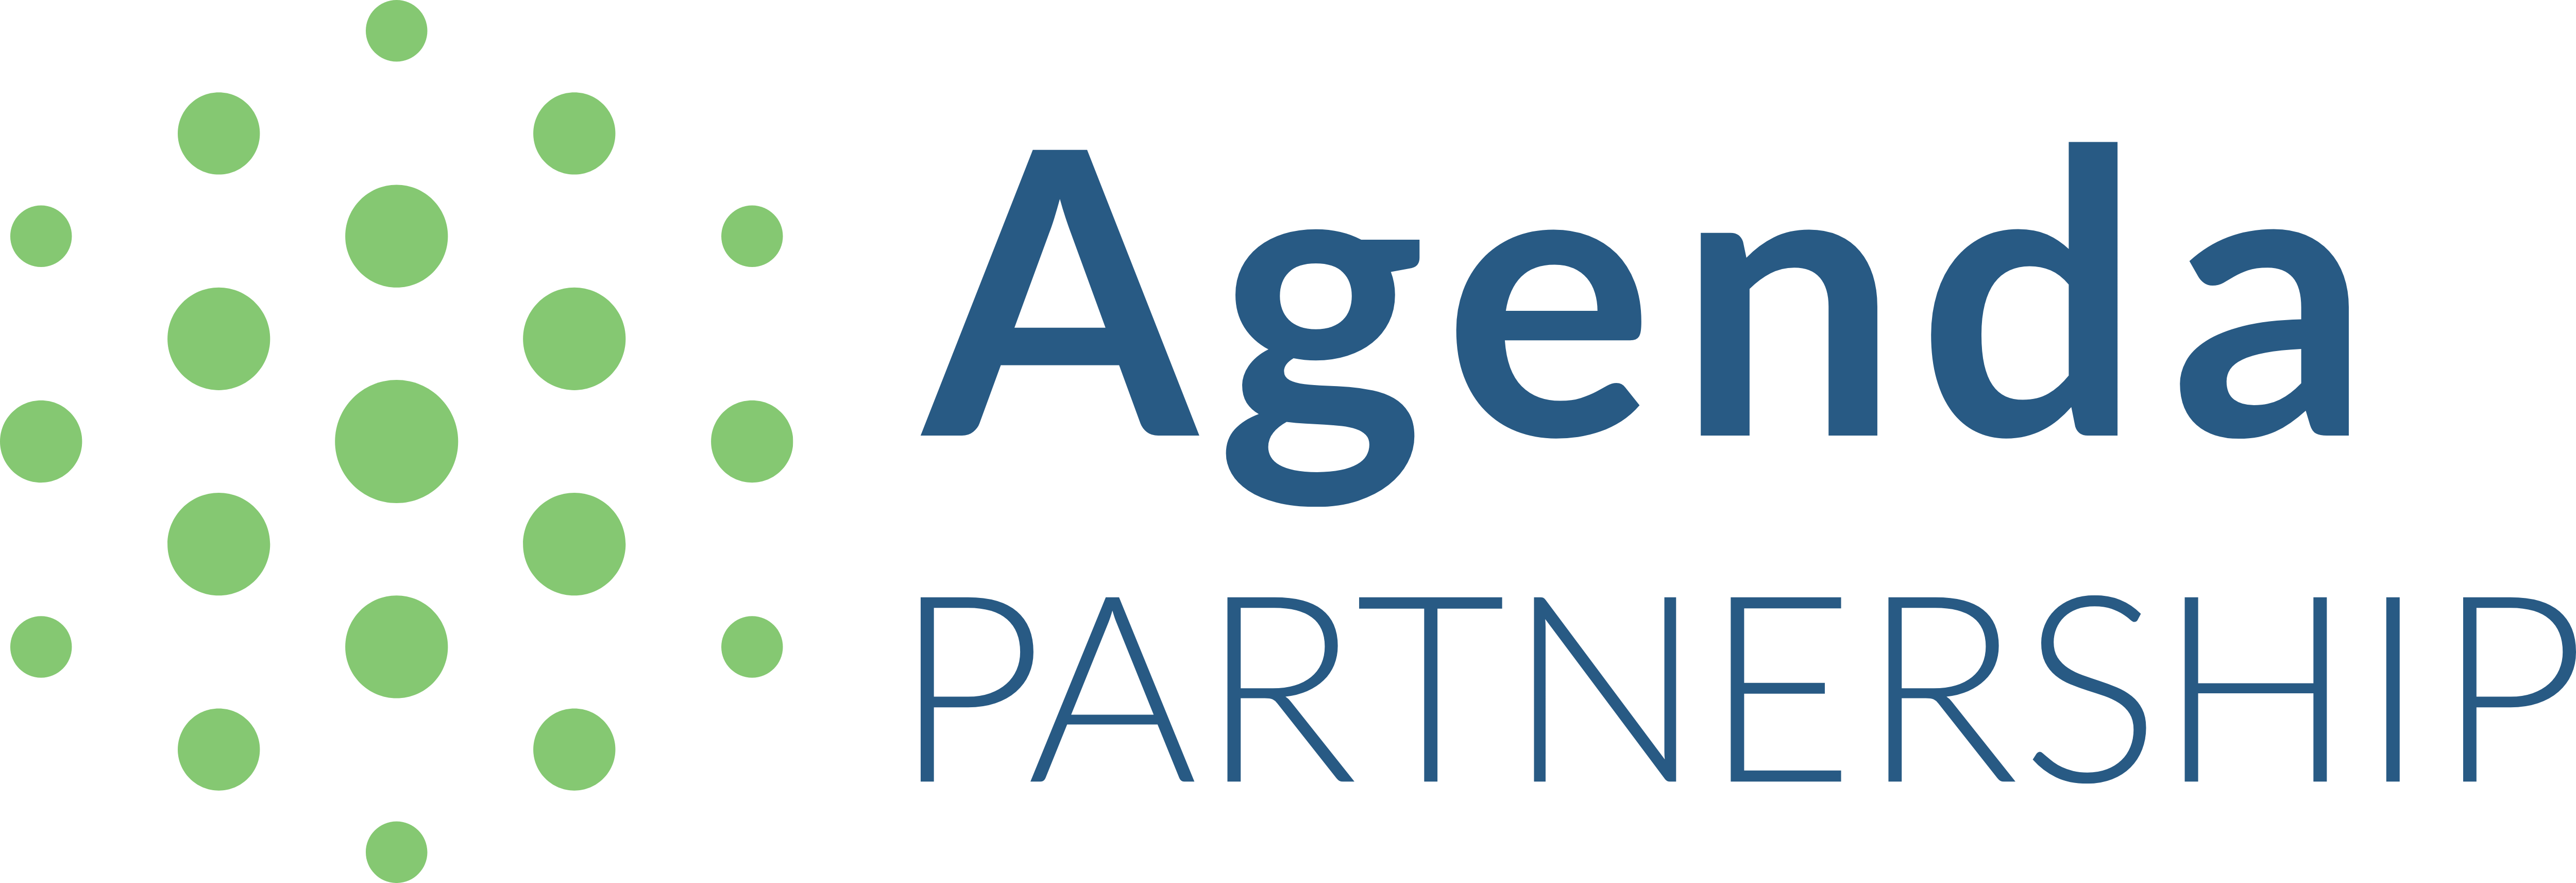 Agenda Partnership :: Home